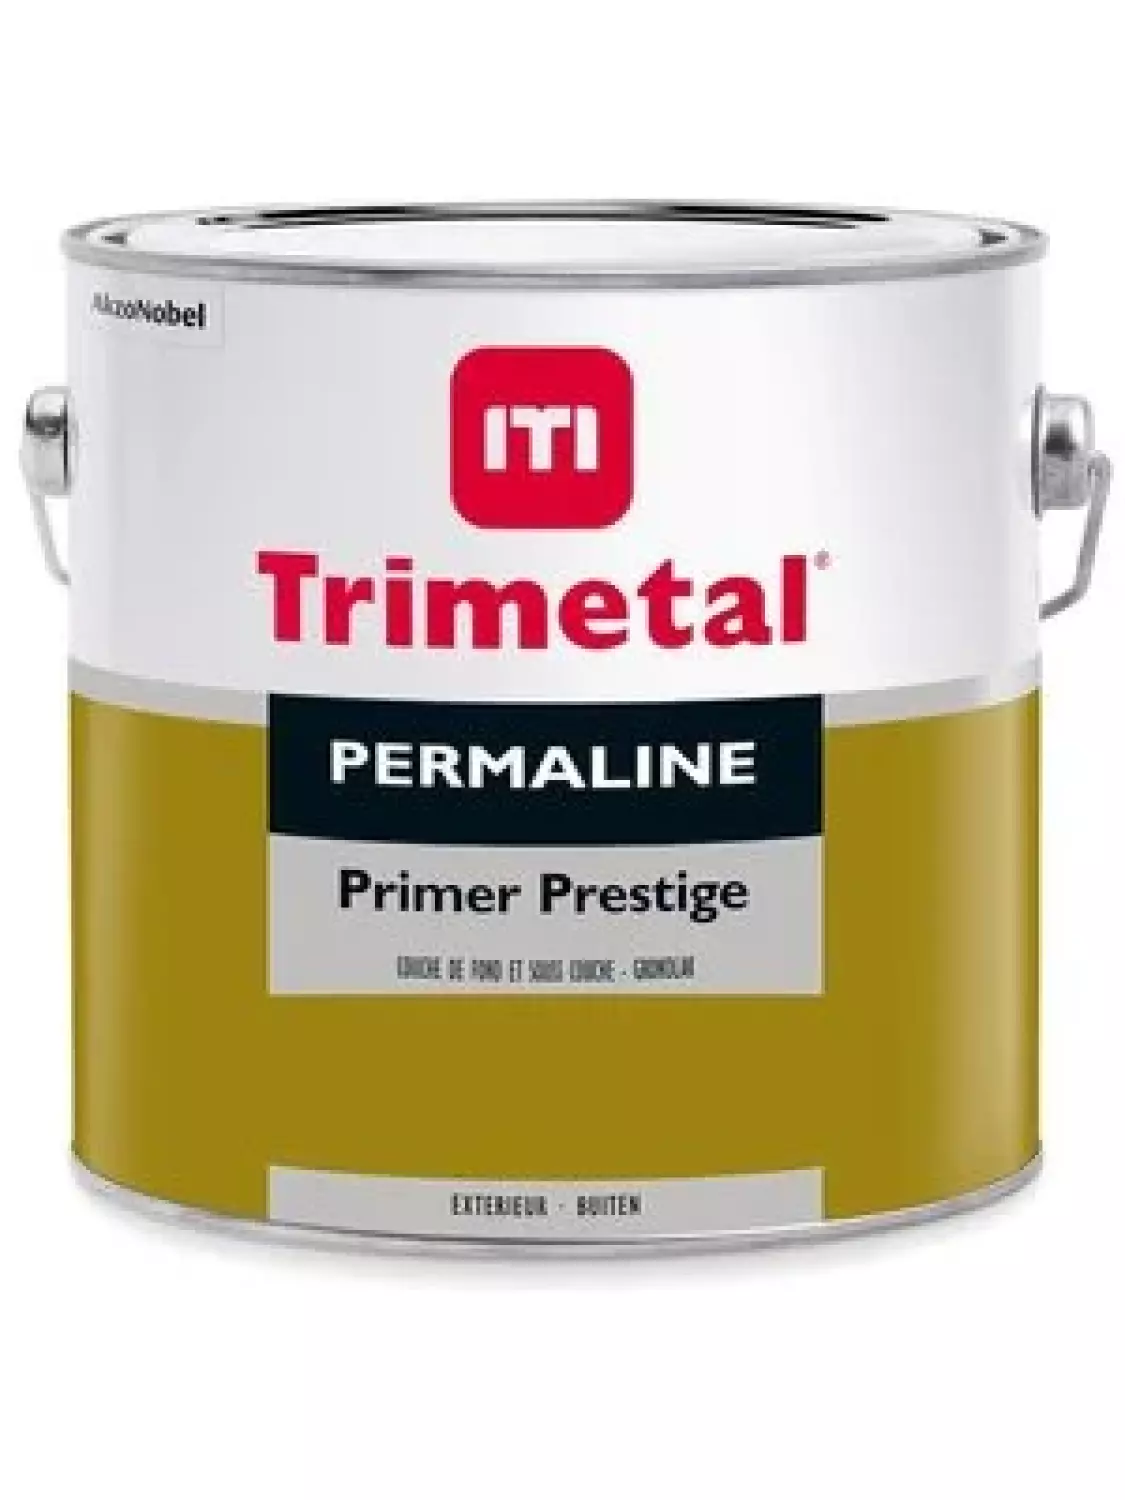 Trimetal permaline primer prestige - op kleur gemengd - 900 Ml-image